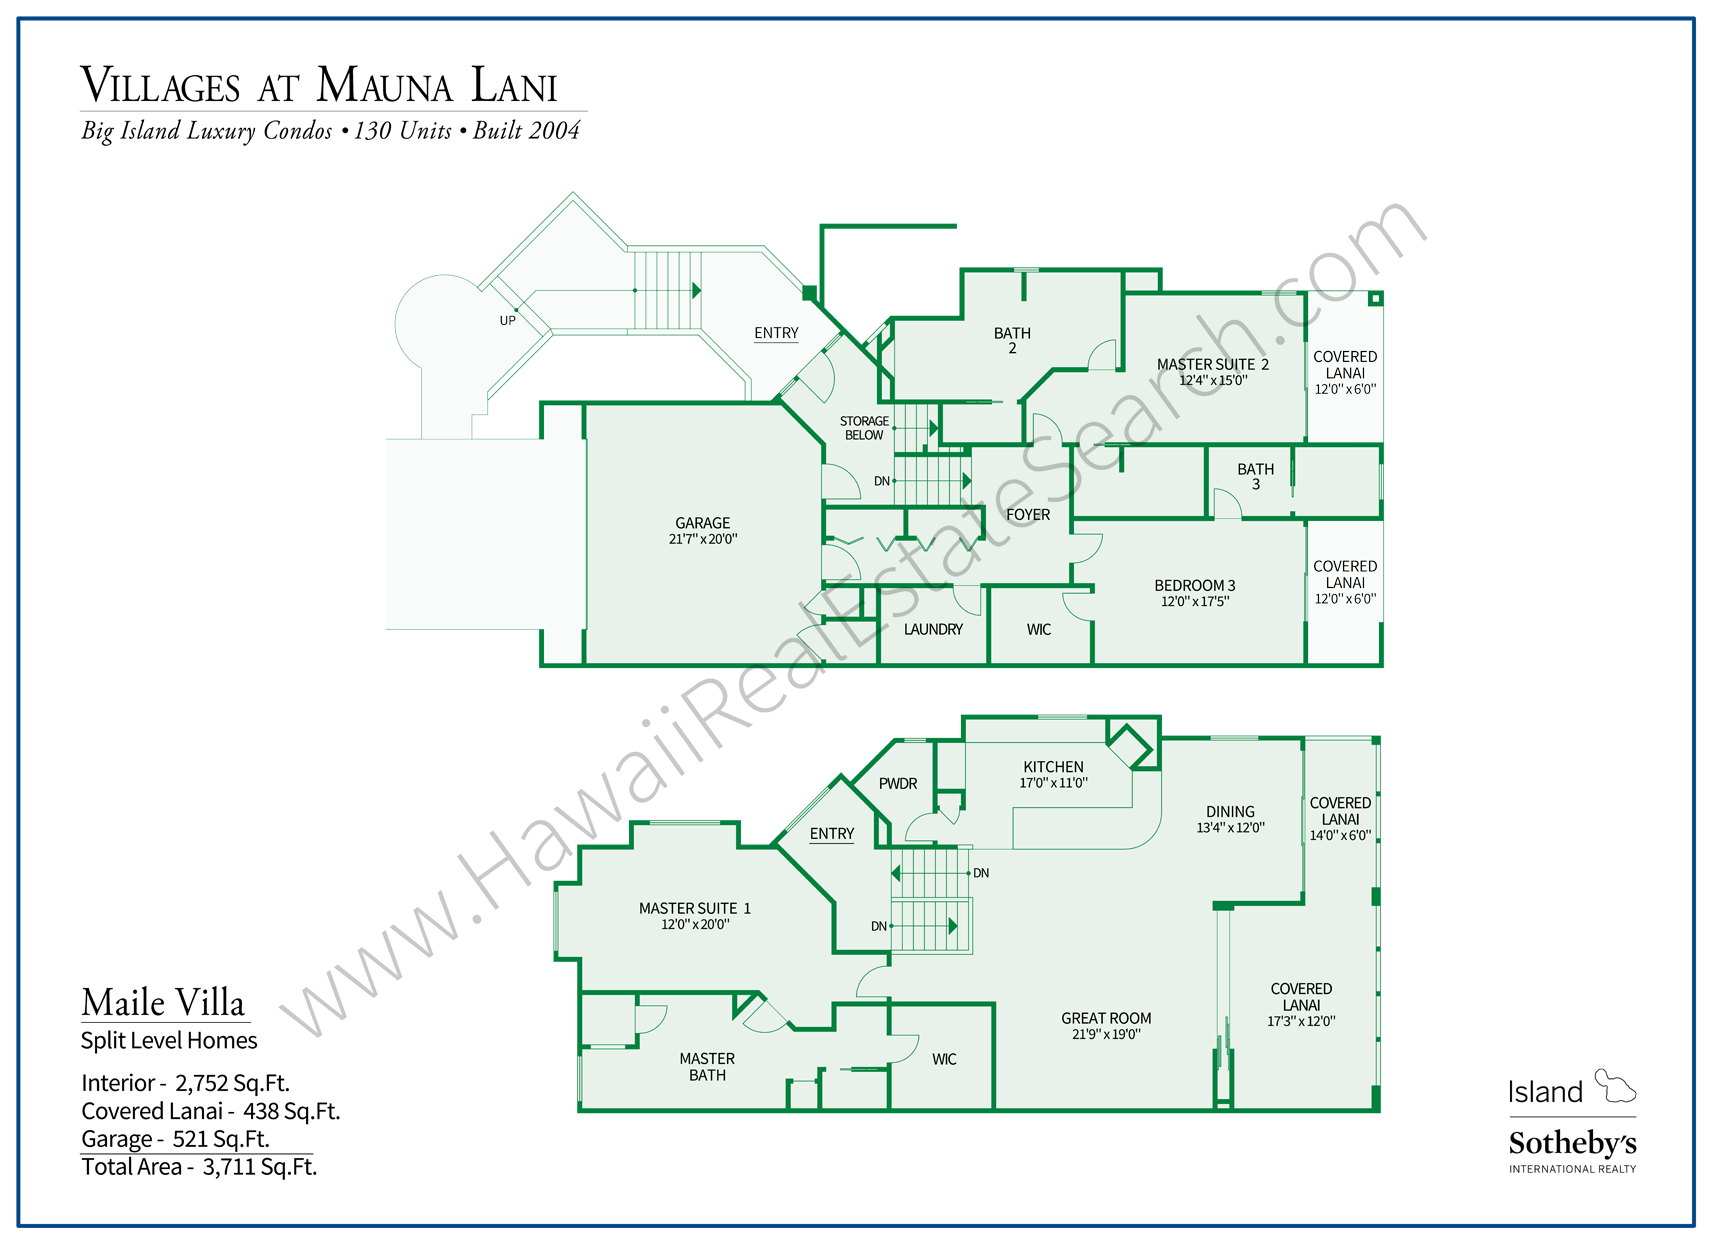 Villages at Mauna Lani Floor Plan 4